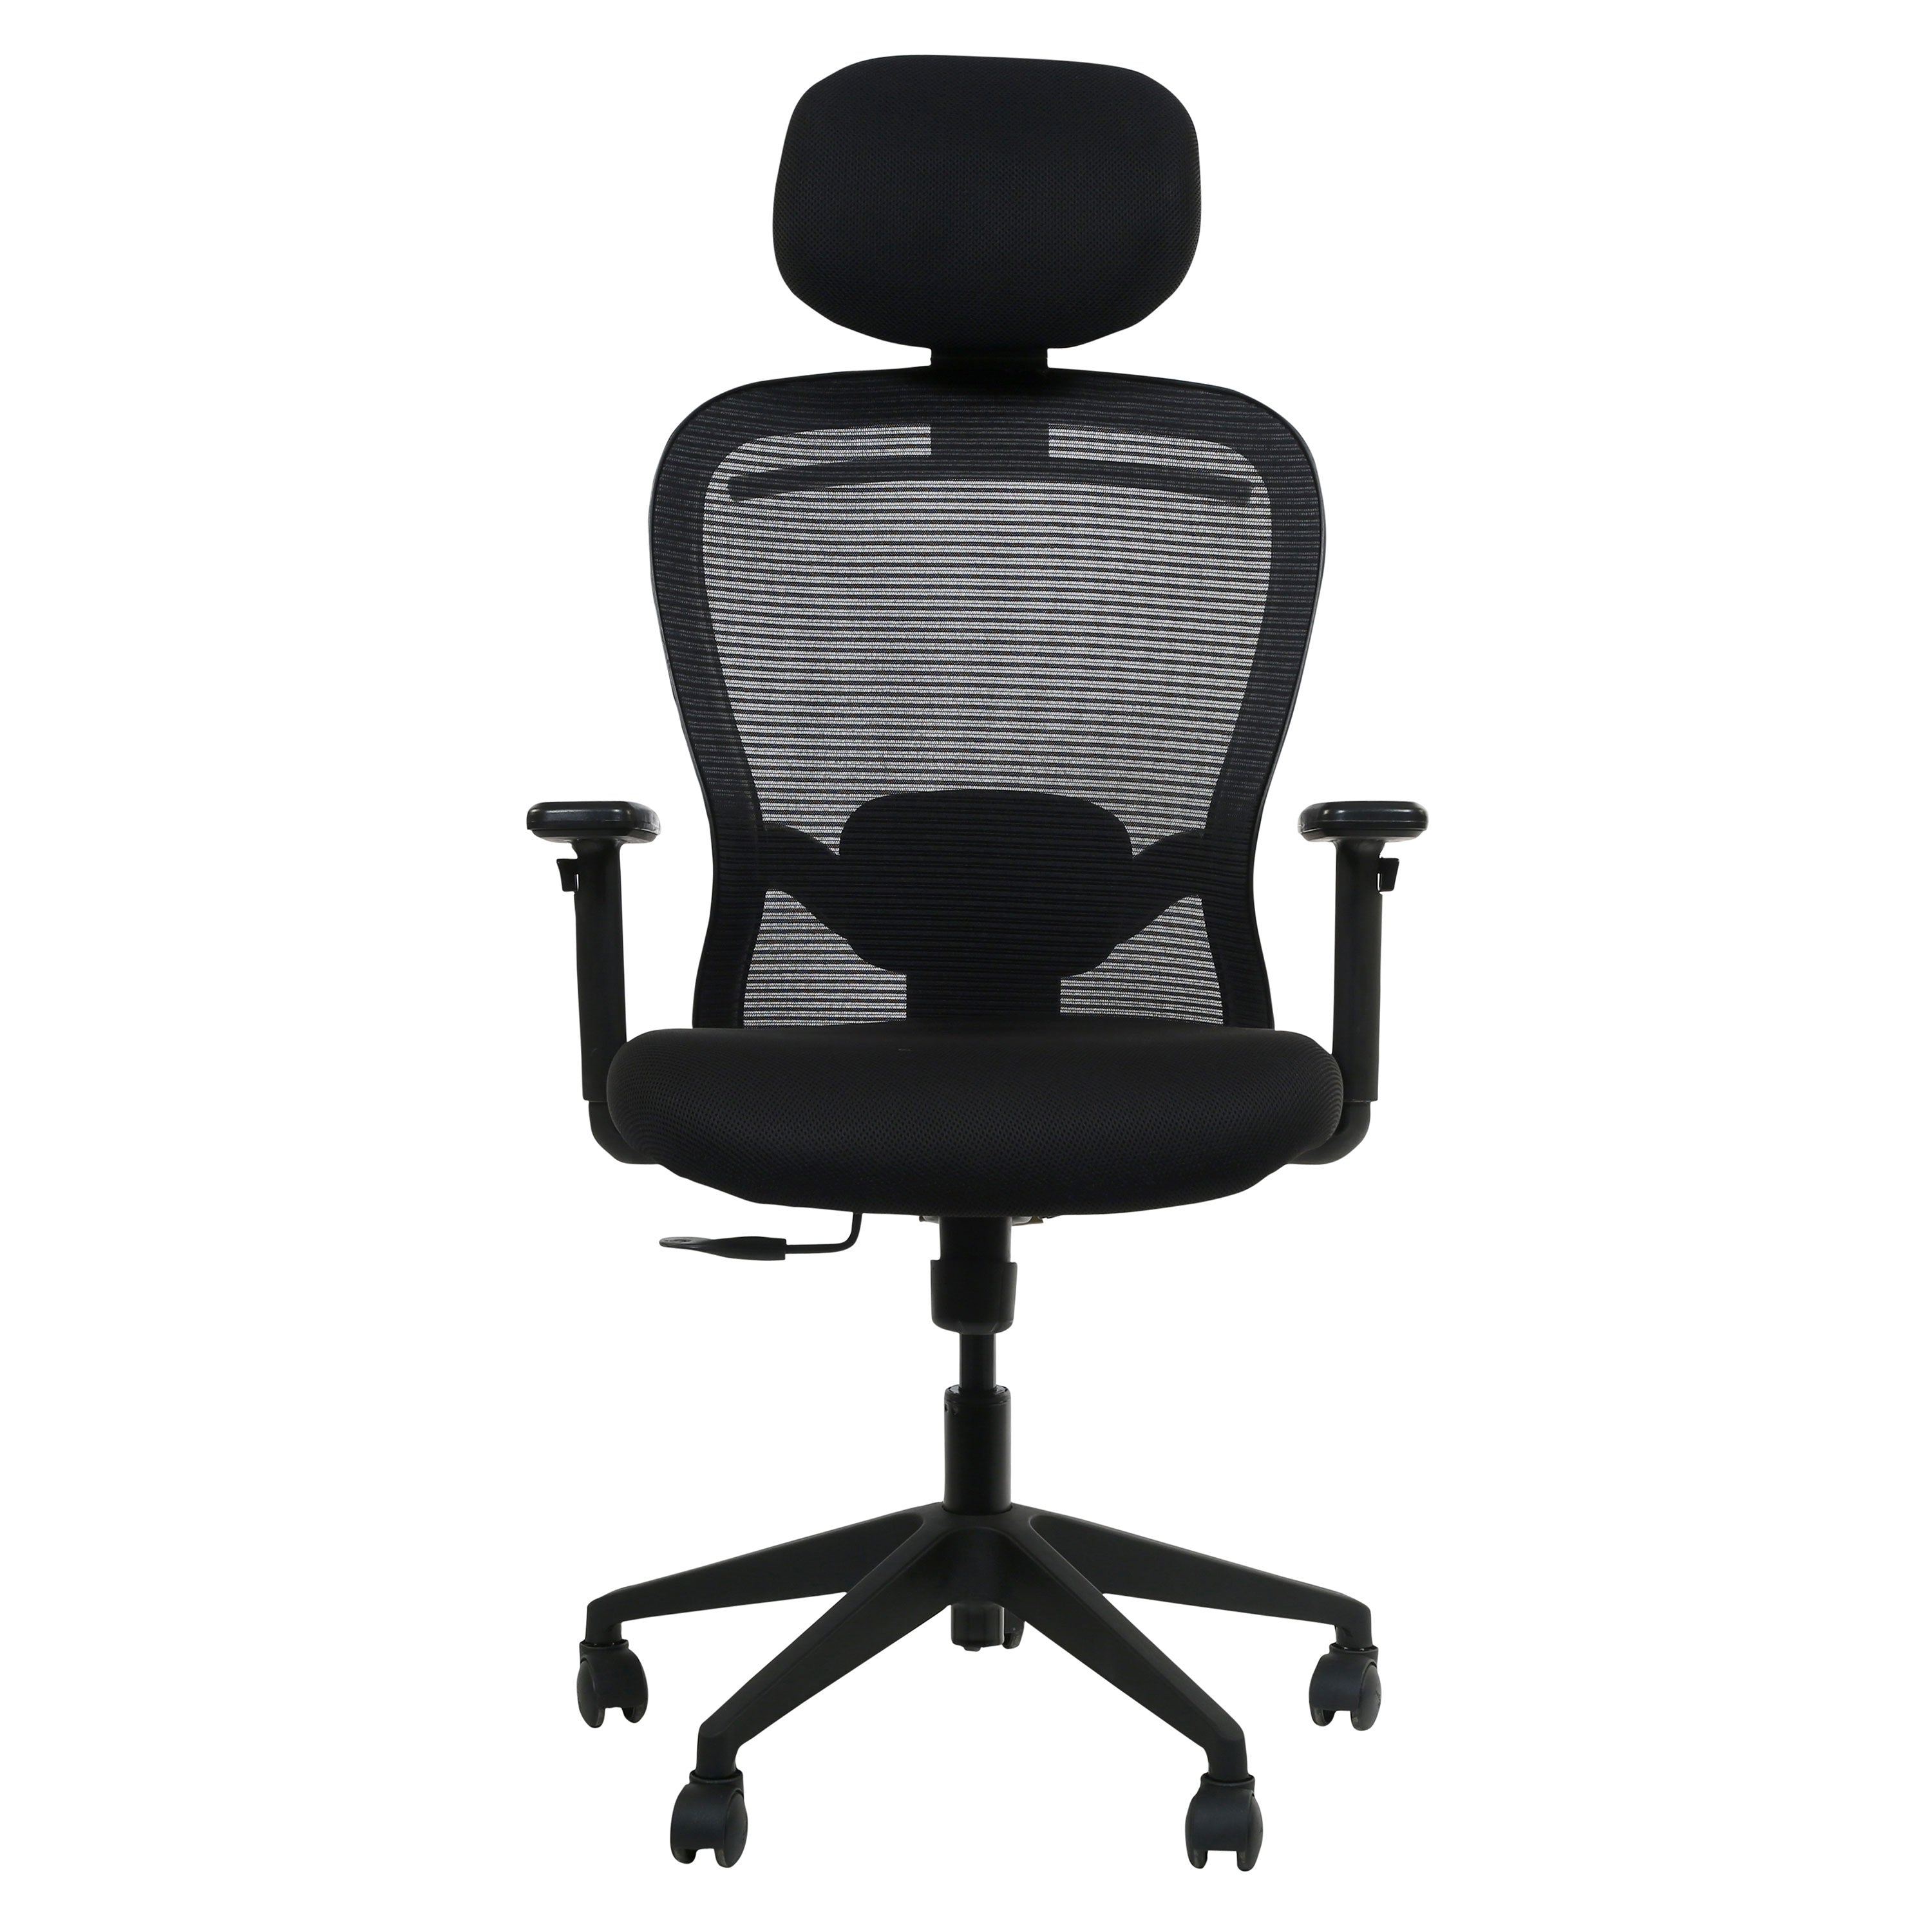 Adella High Back Executive Cusion Office Chair - Black